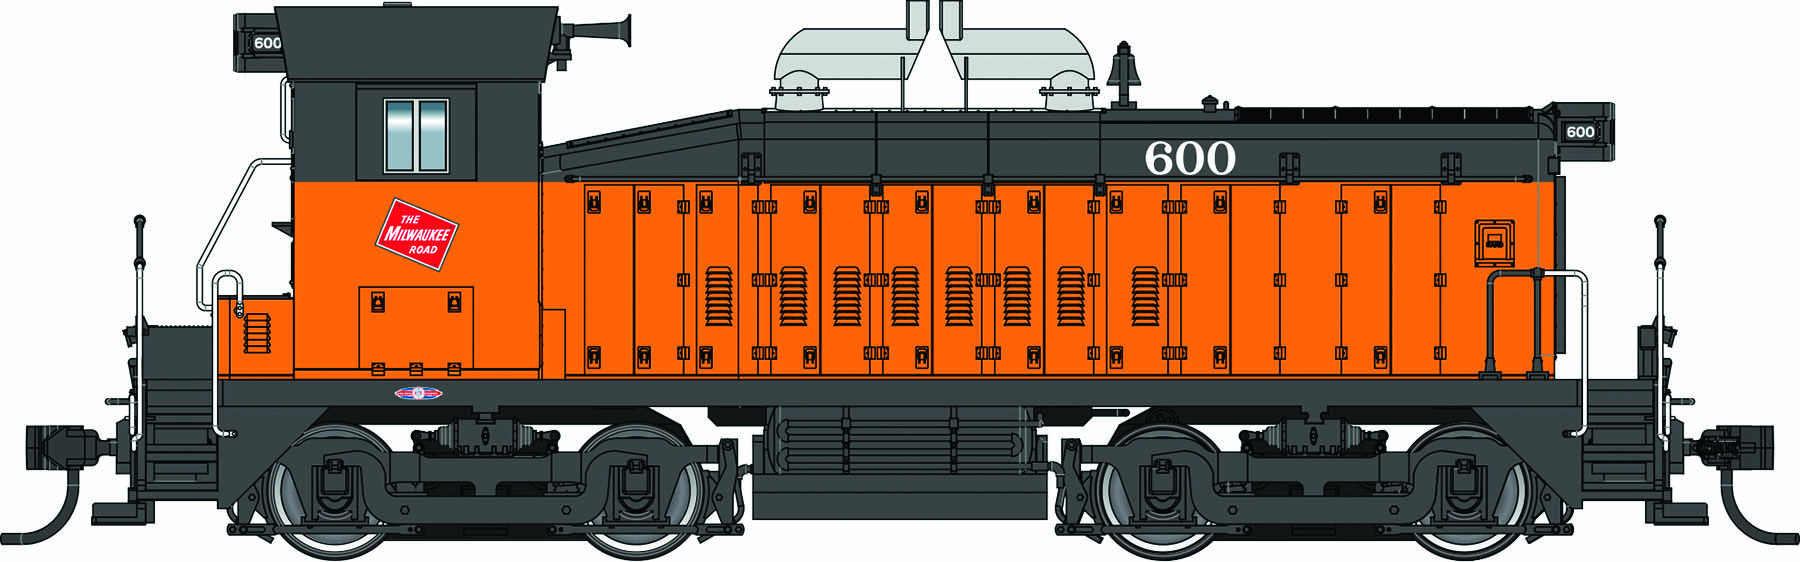 Model of orange and black train locomotive